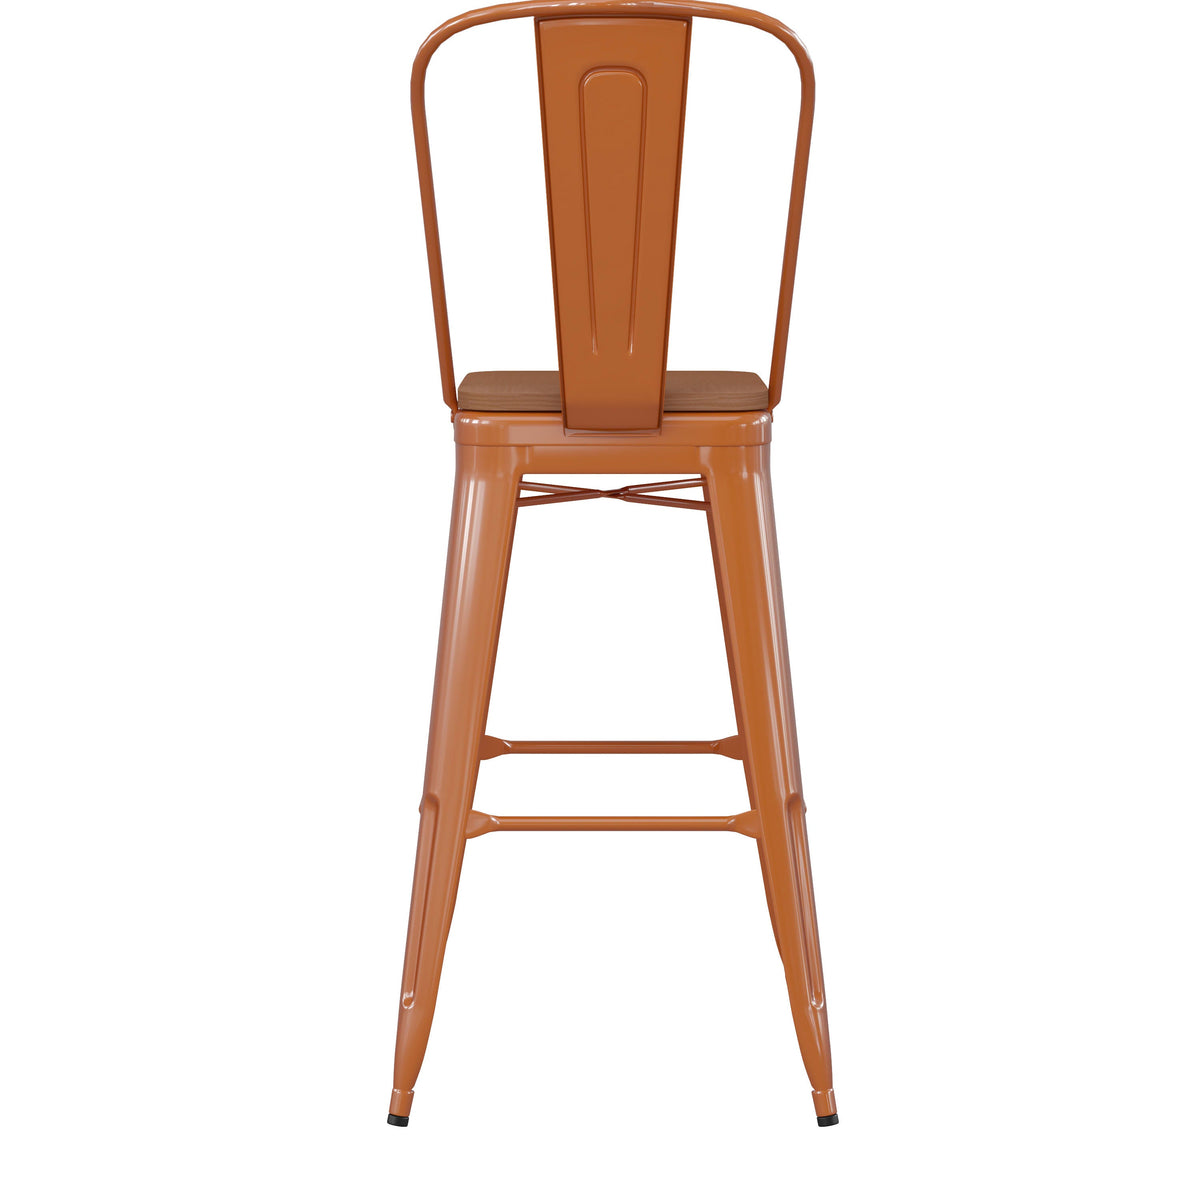 Orange/Teak |#| All-Weather Commercial Bar Stool with Removable Back/Poly Seat-Orange/Teak